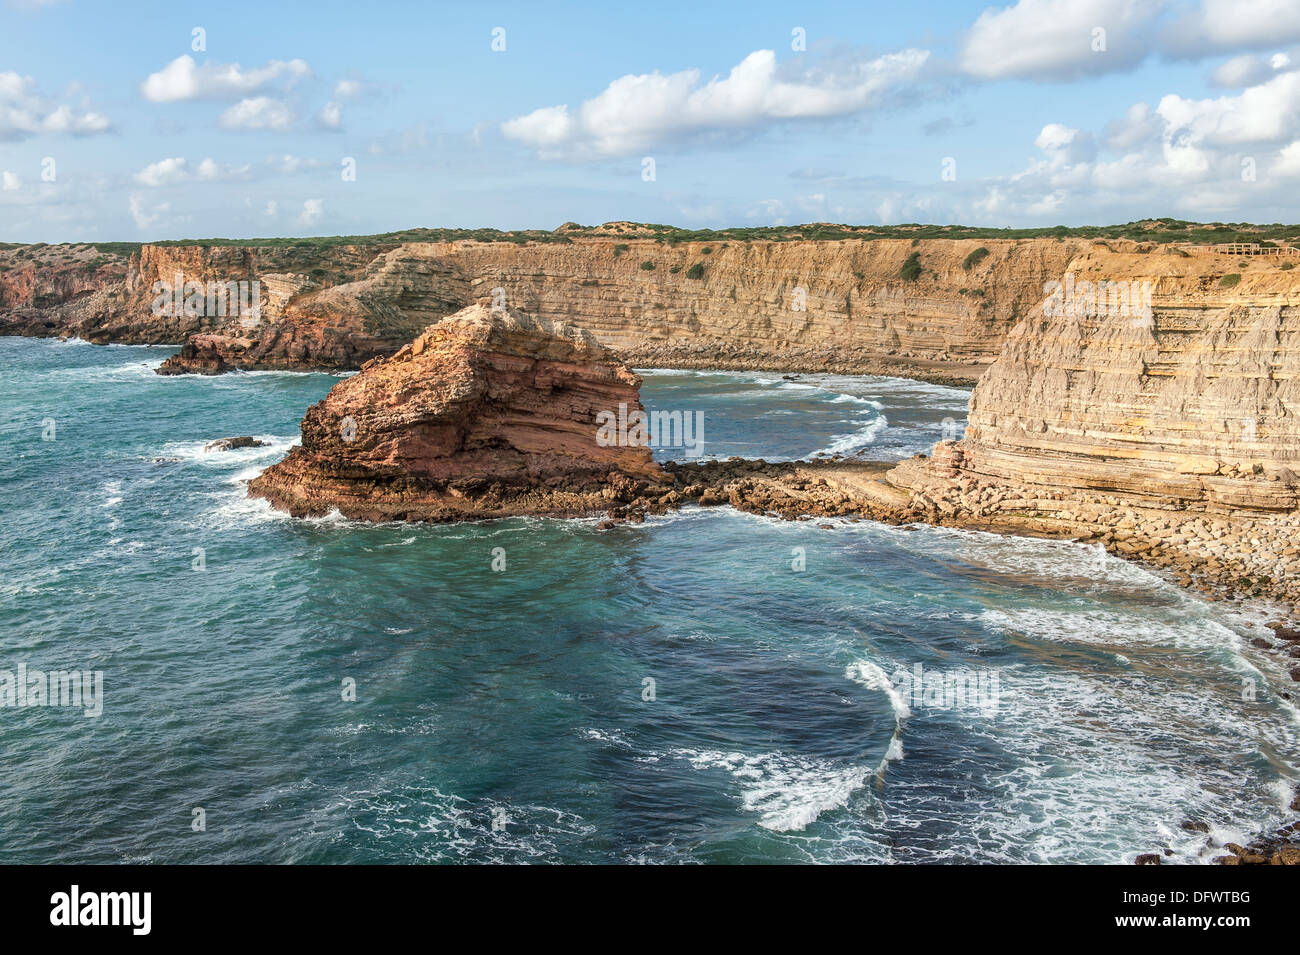 Costa Vicentina beach and cliffs, Algarve, Portugal Stock Photo